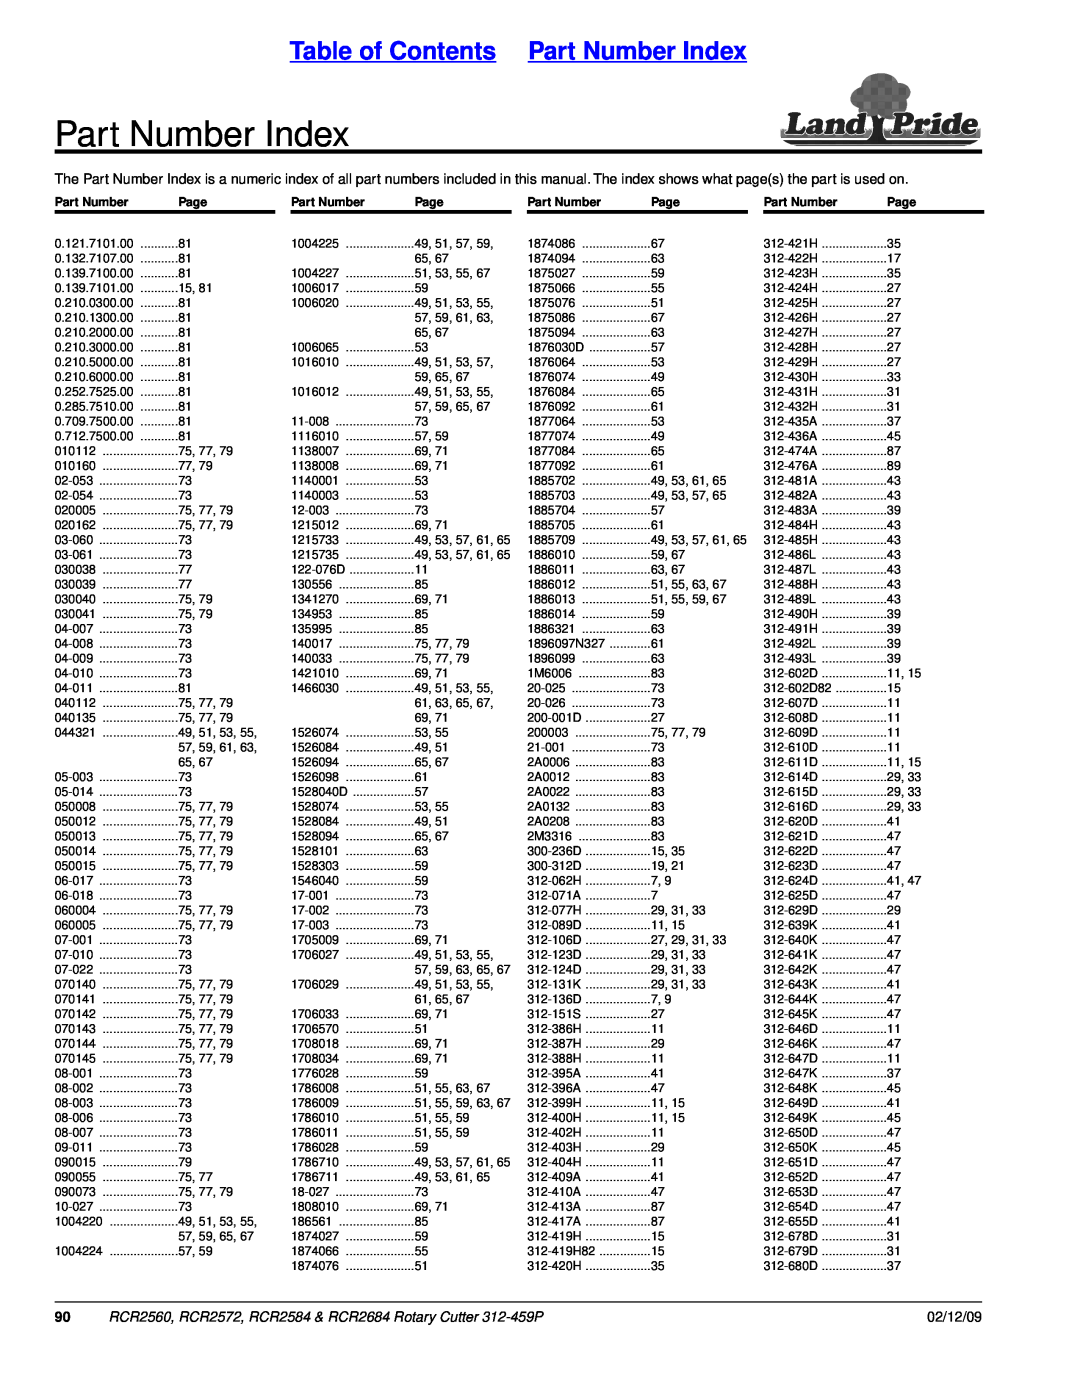 Land Pride RCR2572, RCR2684, RCR2584, RCR2560 manual Table of Contents Part Number Index, 02/12/09, Page 